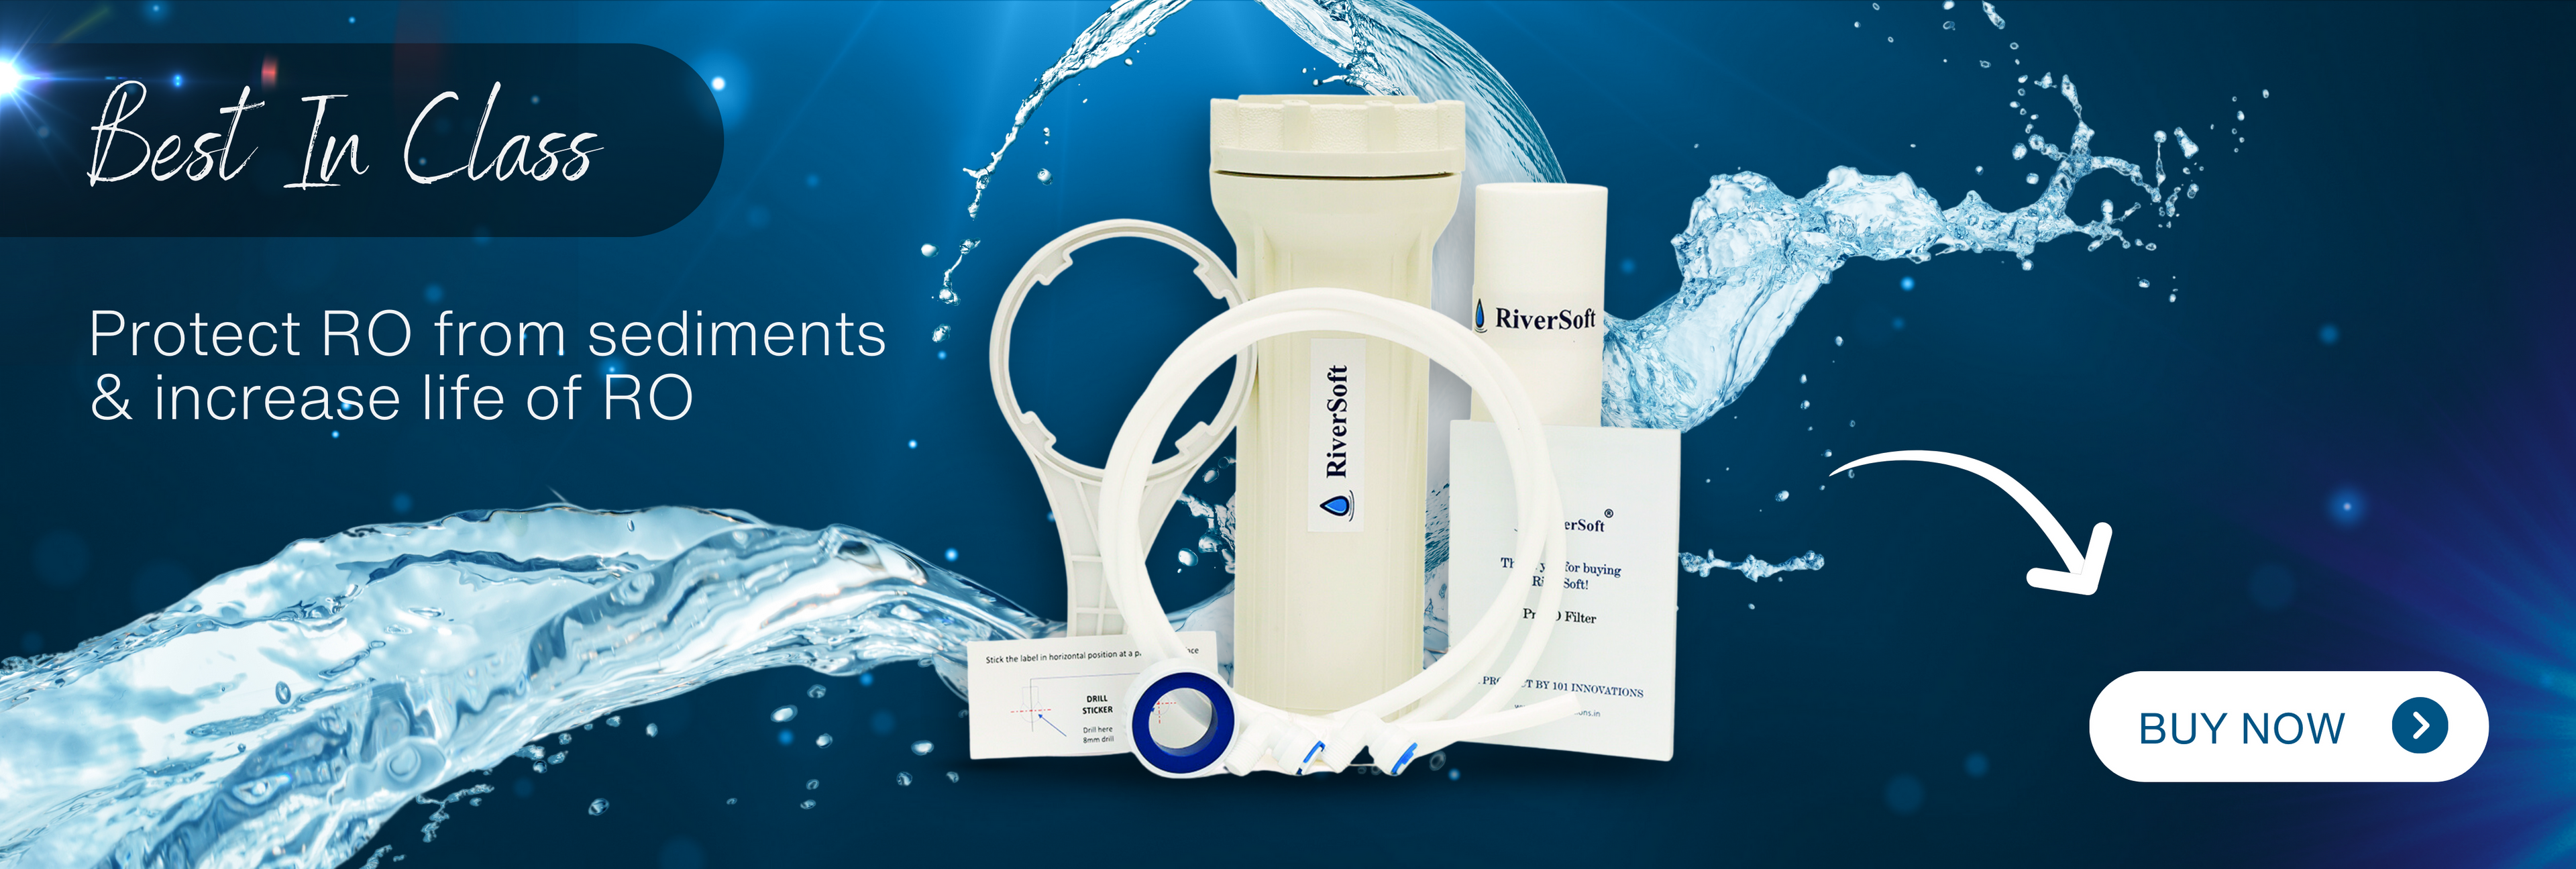 RiverSoft Water Softener